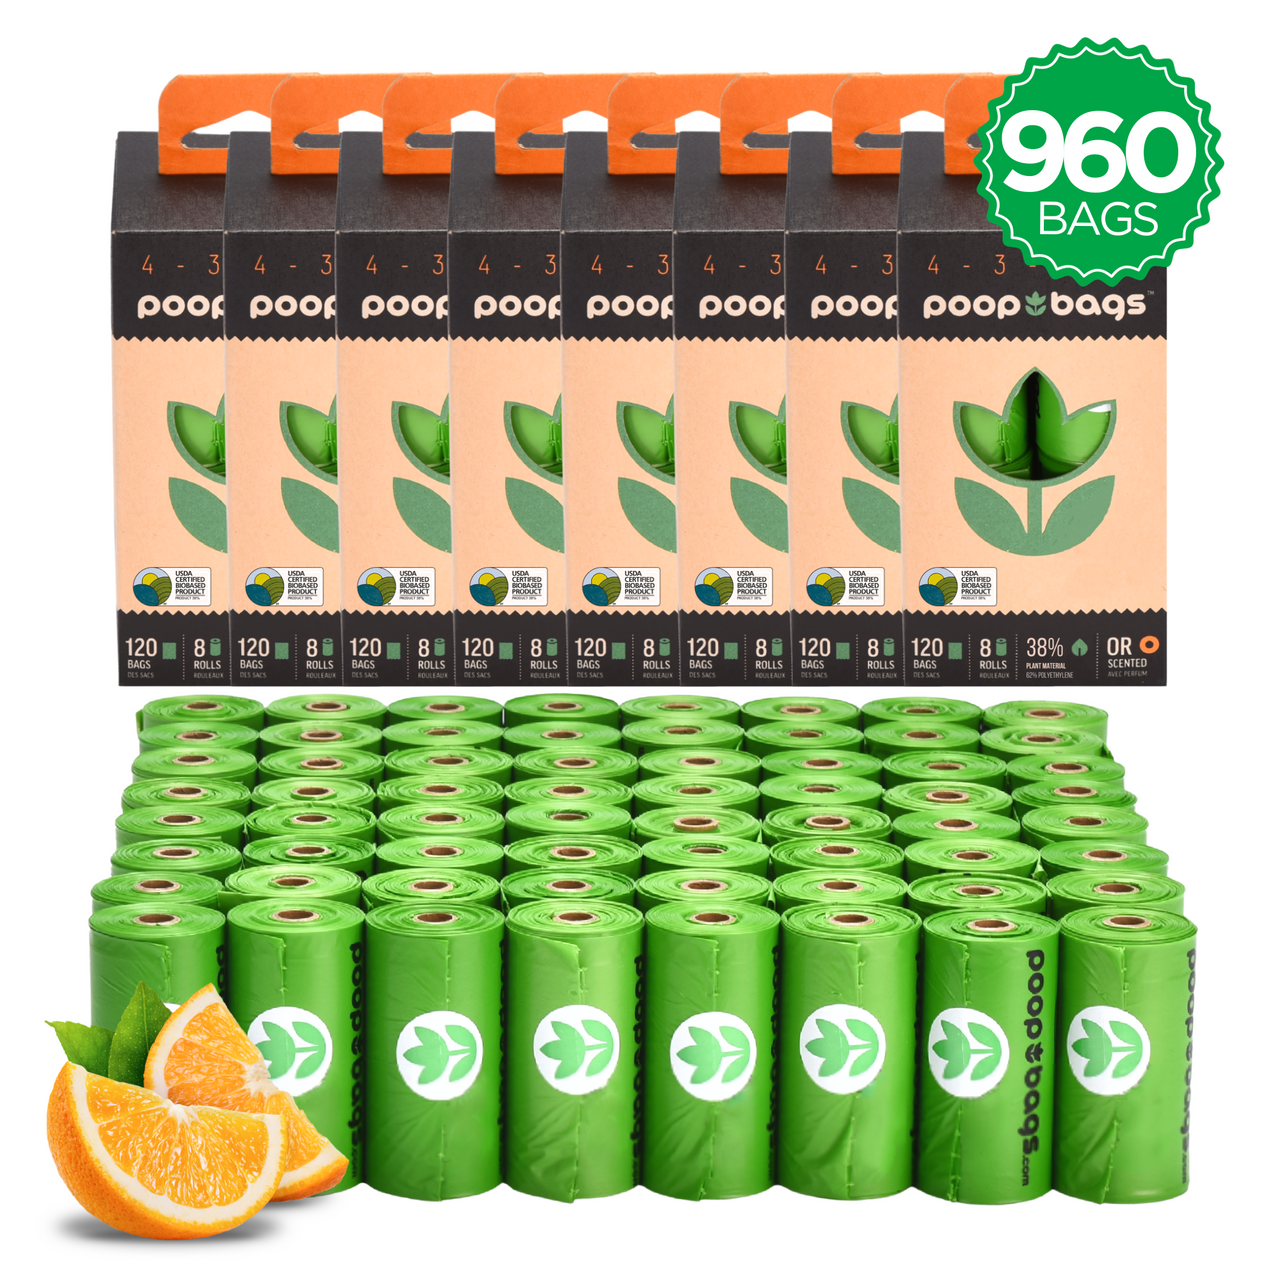 The Original Poop Bags® 960 USDA Certified Biobased Orange Scented Countdown Rolls®